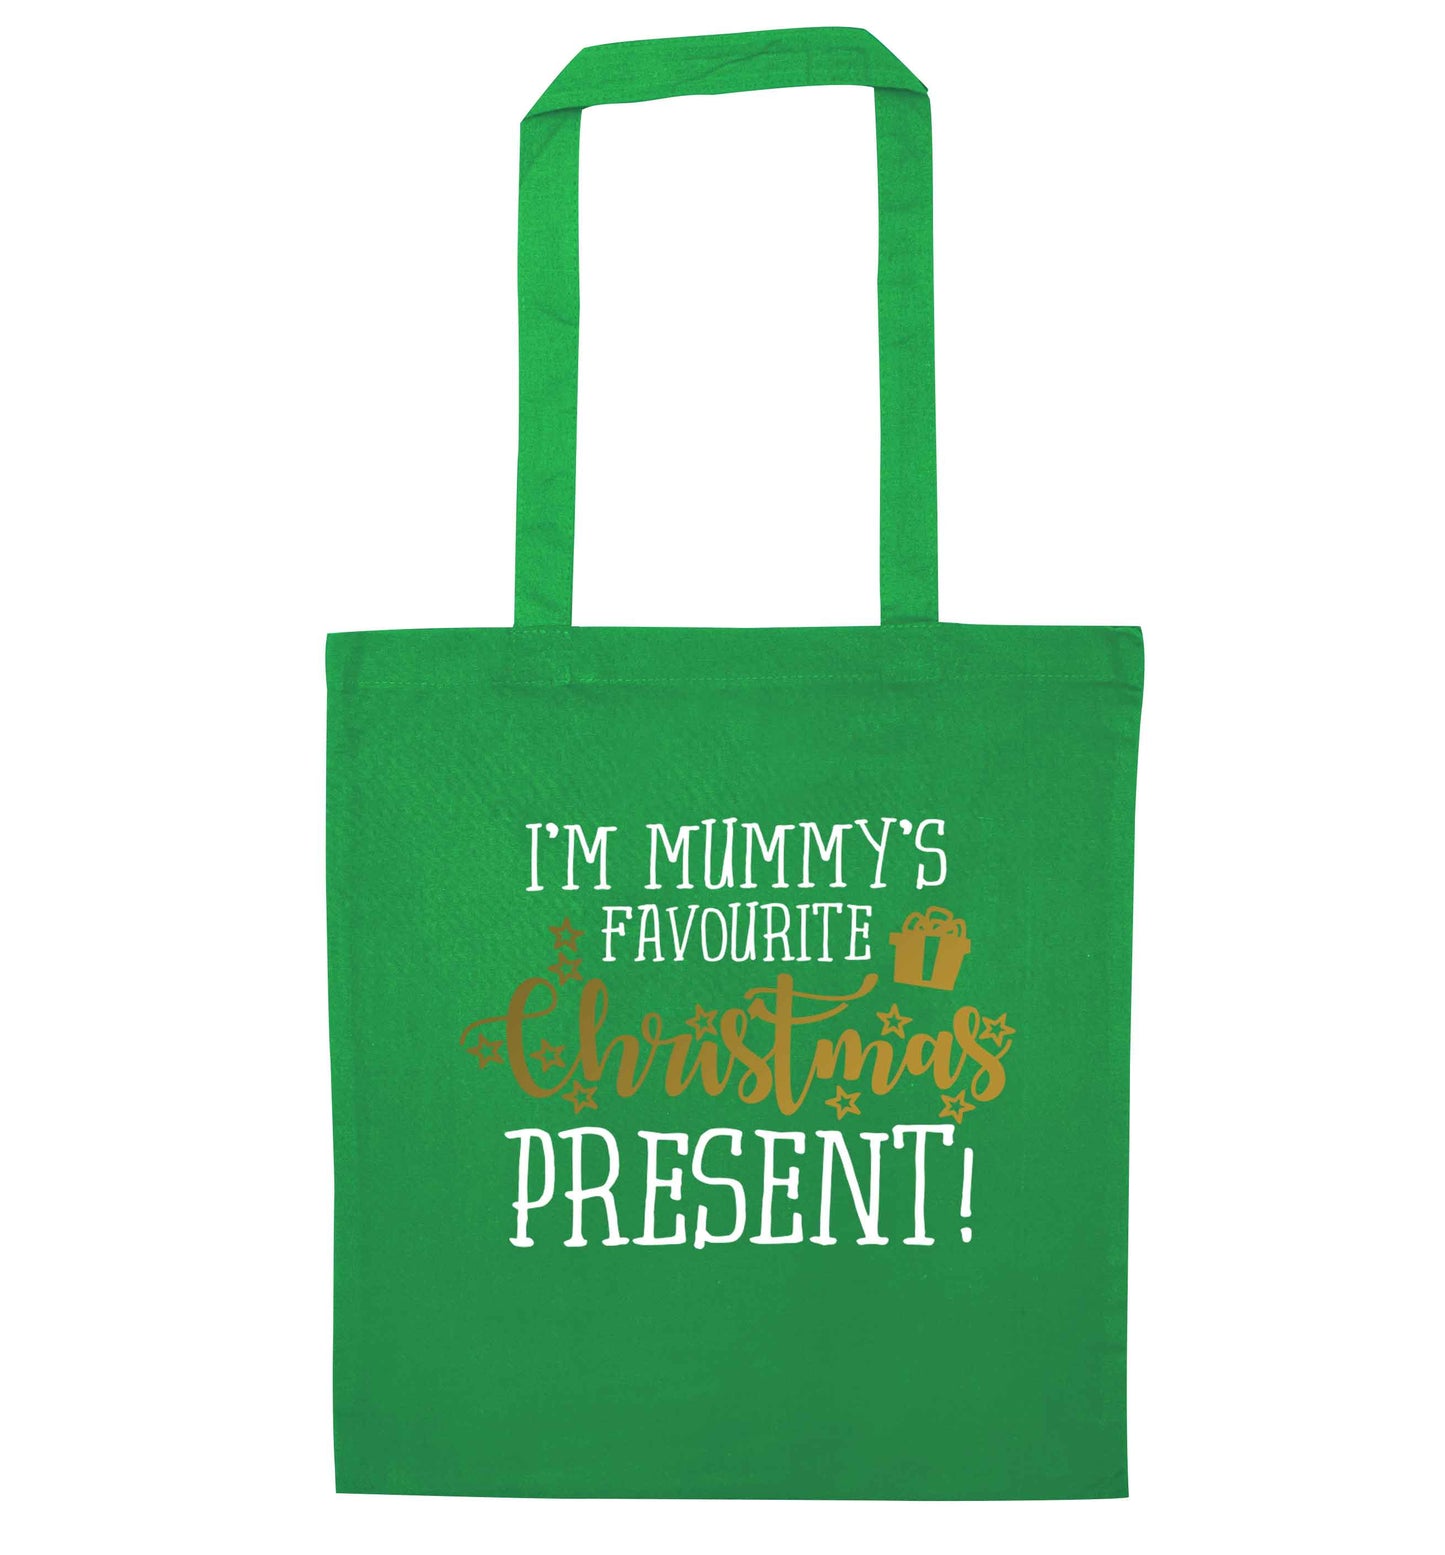 I'm Mummy's favourite Christmas present green tote bag